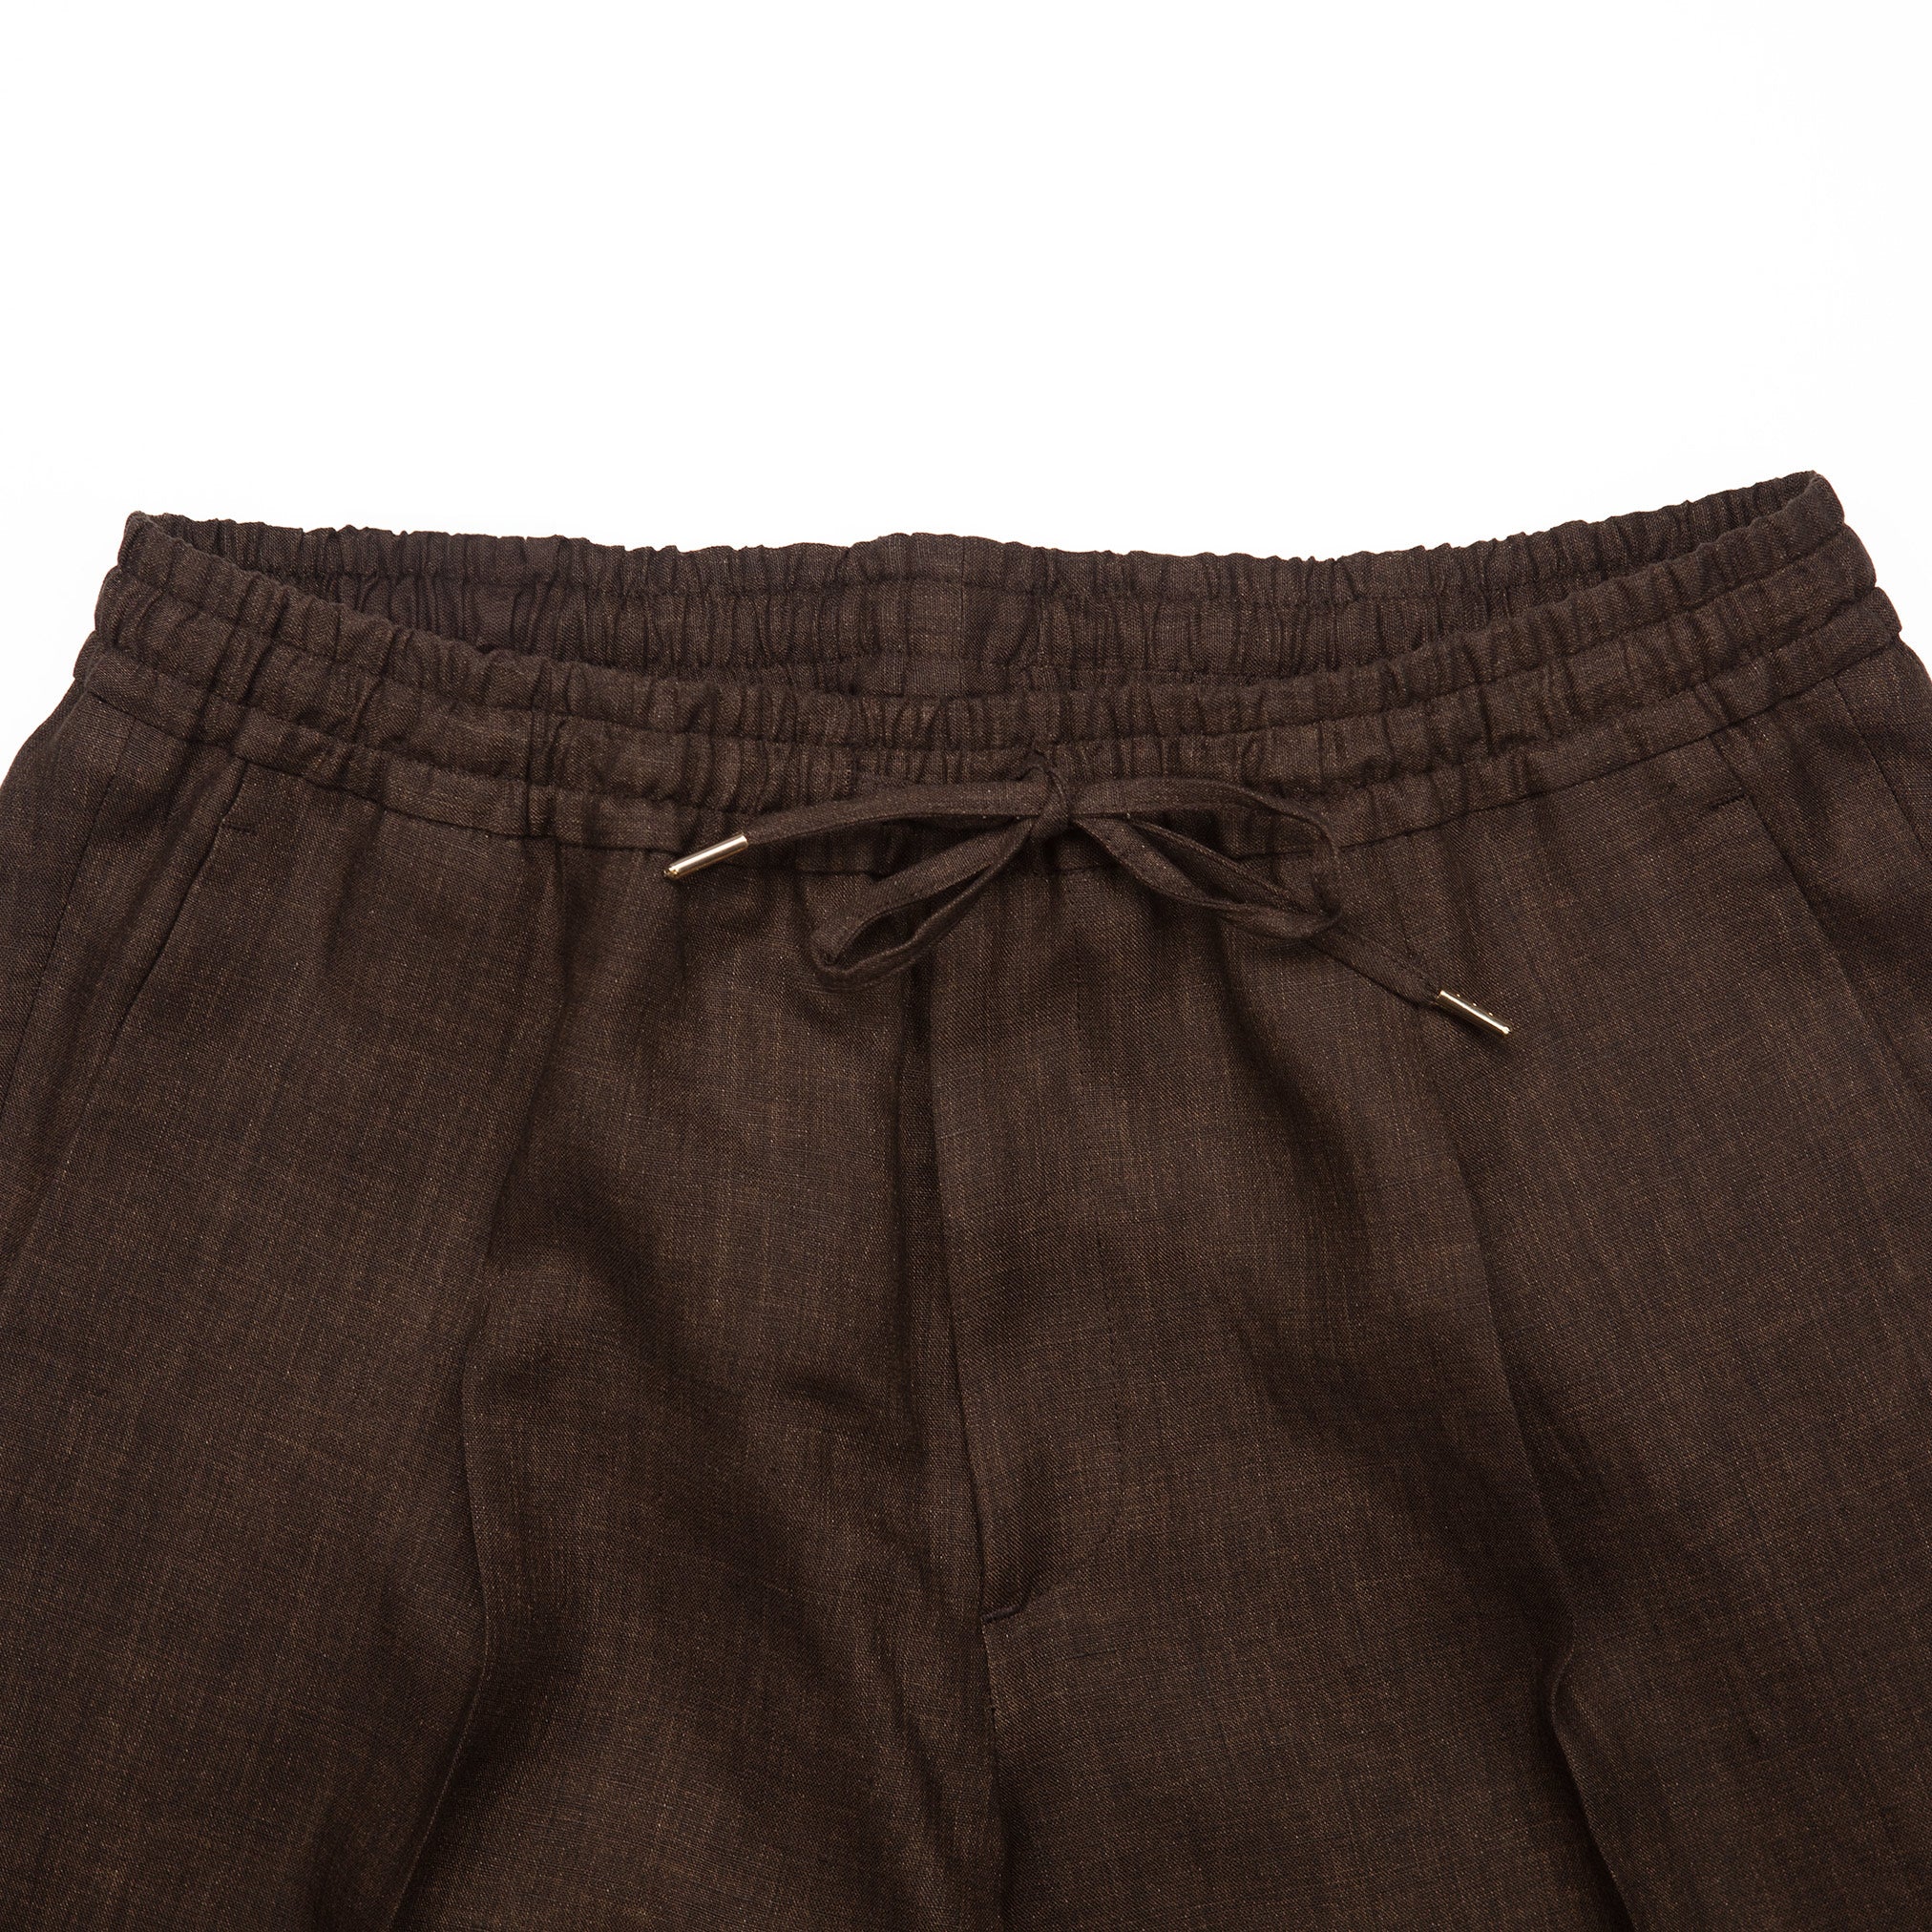 Wimbledon Pants in Brown Linen